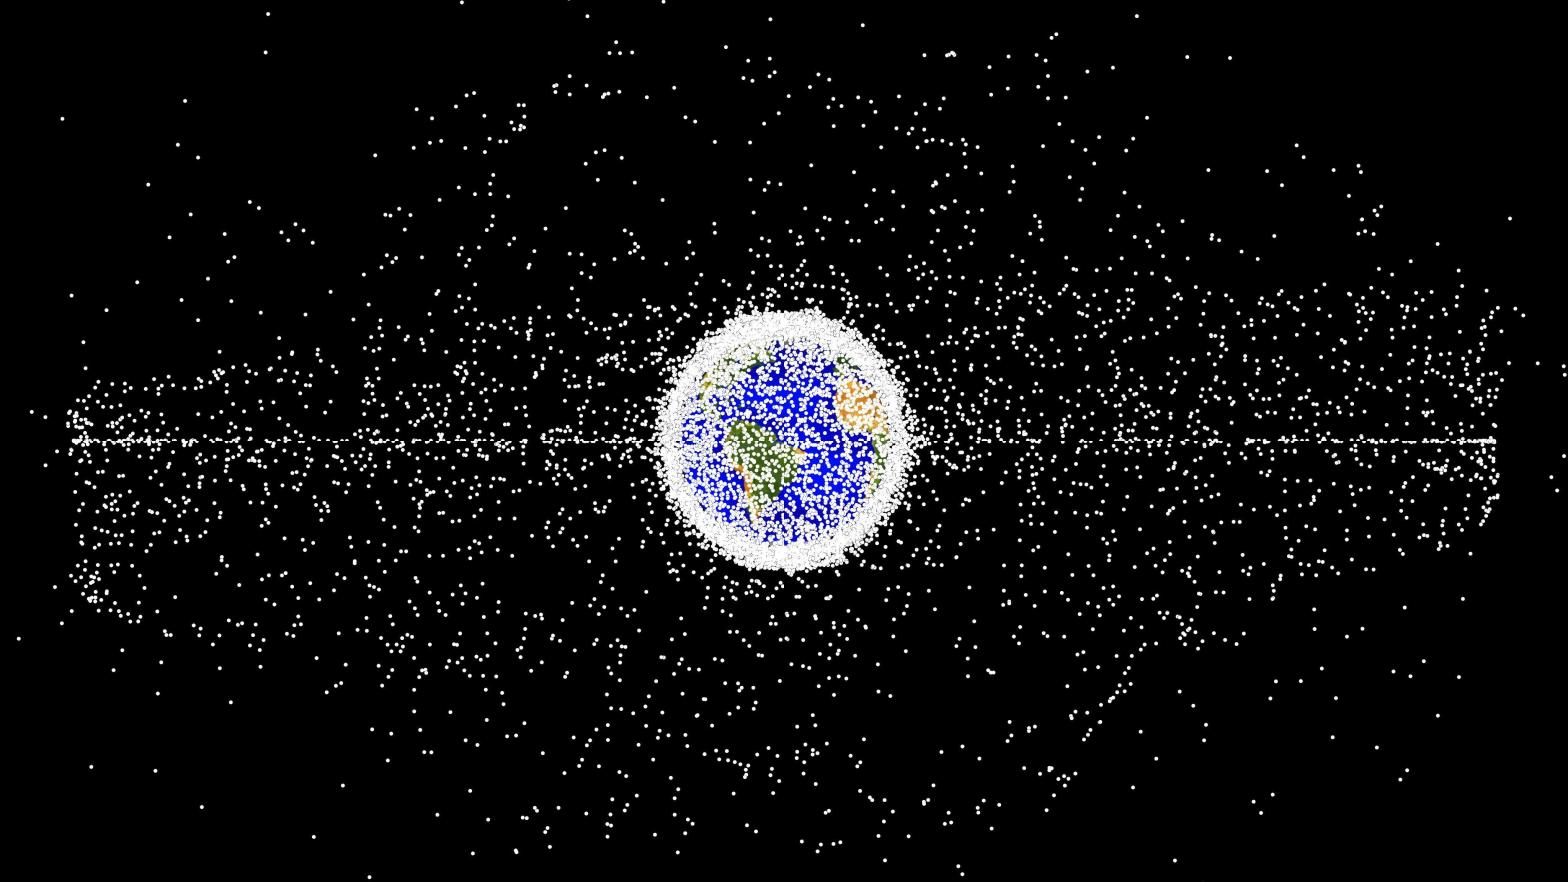 A simulation of the debris orbiting Earth. (Image: NASA ODPO)